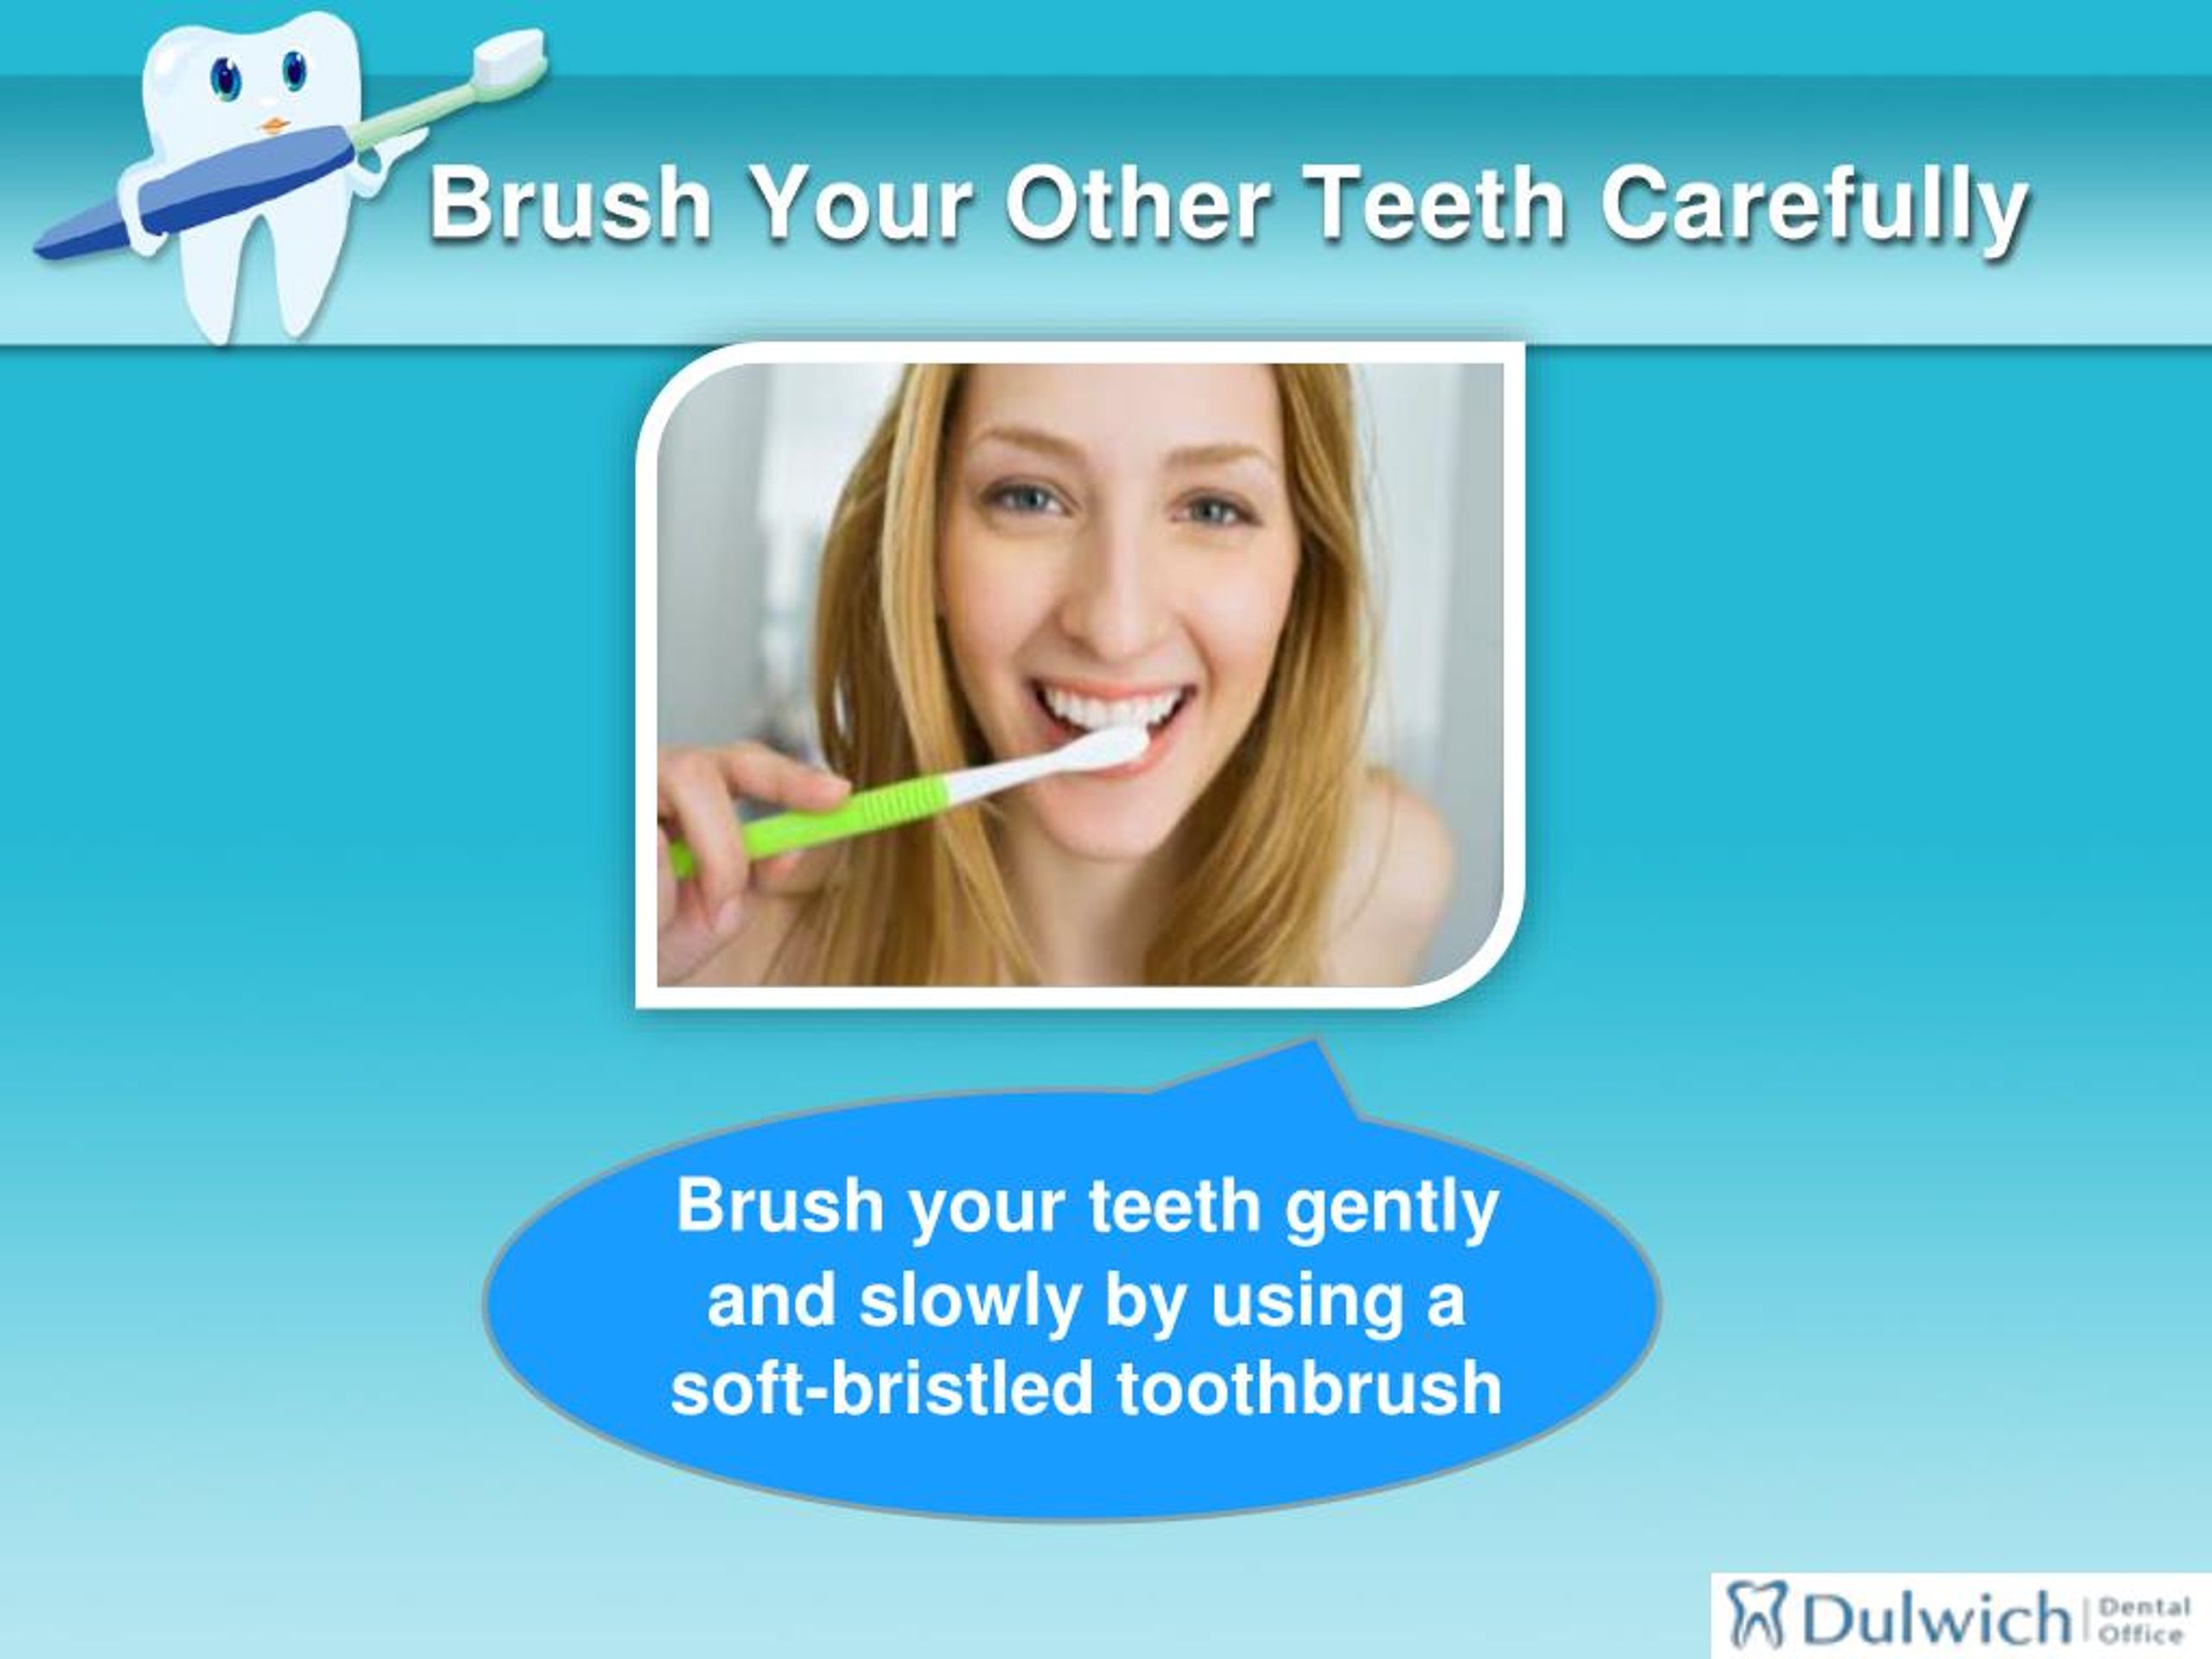 Brushing Teeth after meals. Чистить зубы сразу после еды. Rules for brushing Teeth. Wisdom Teeth removal girl. Do your teeth